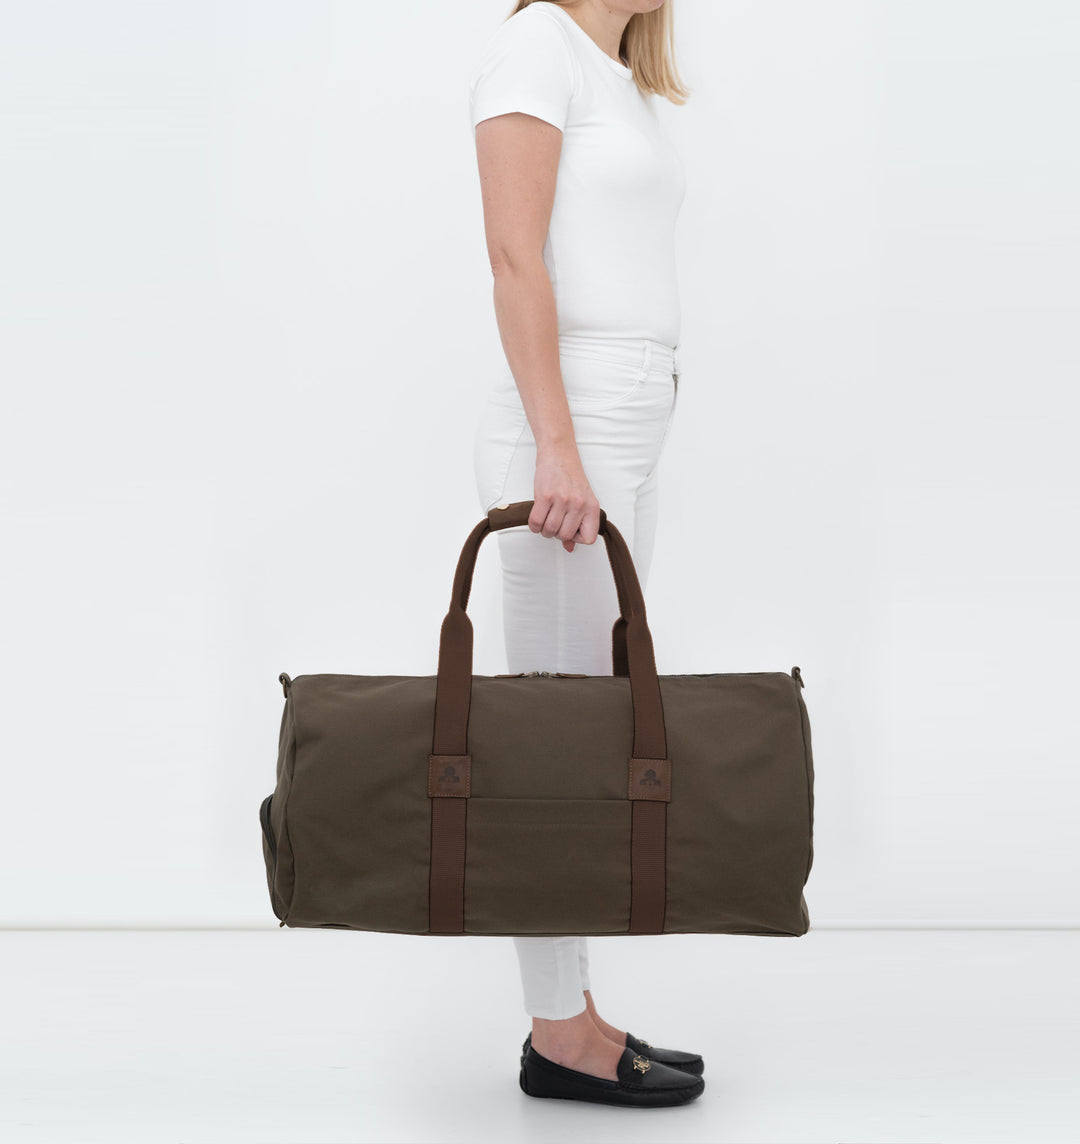 Duffle bag -L- KHAKI with brown strap